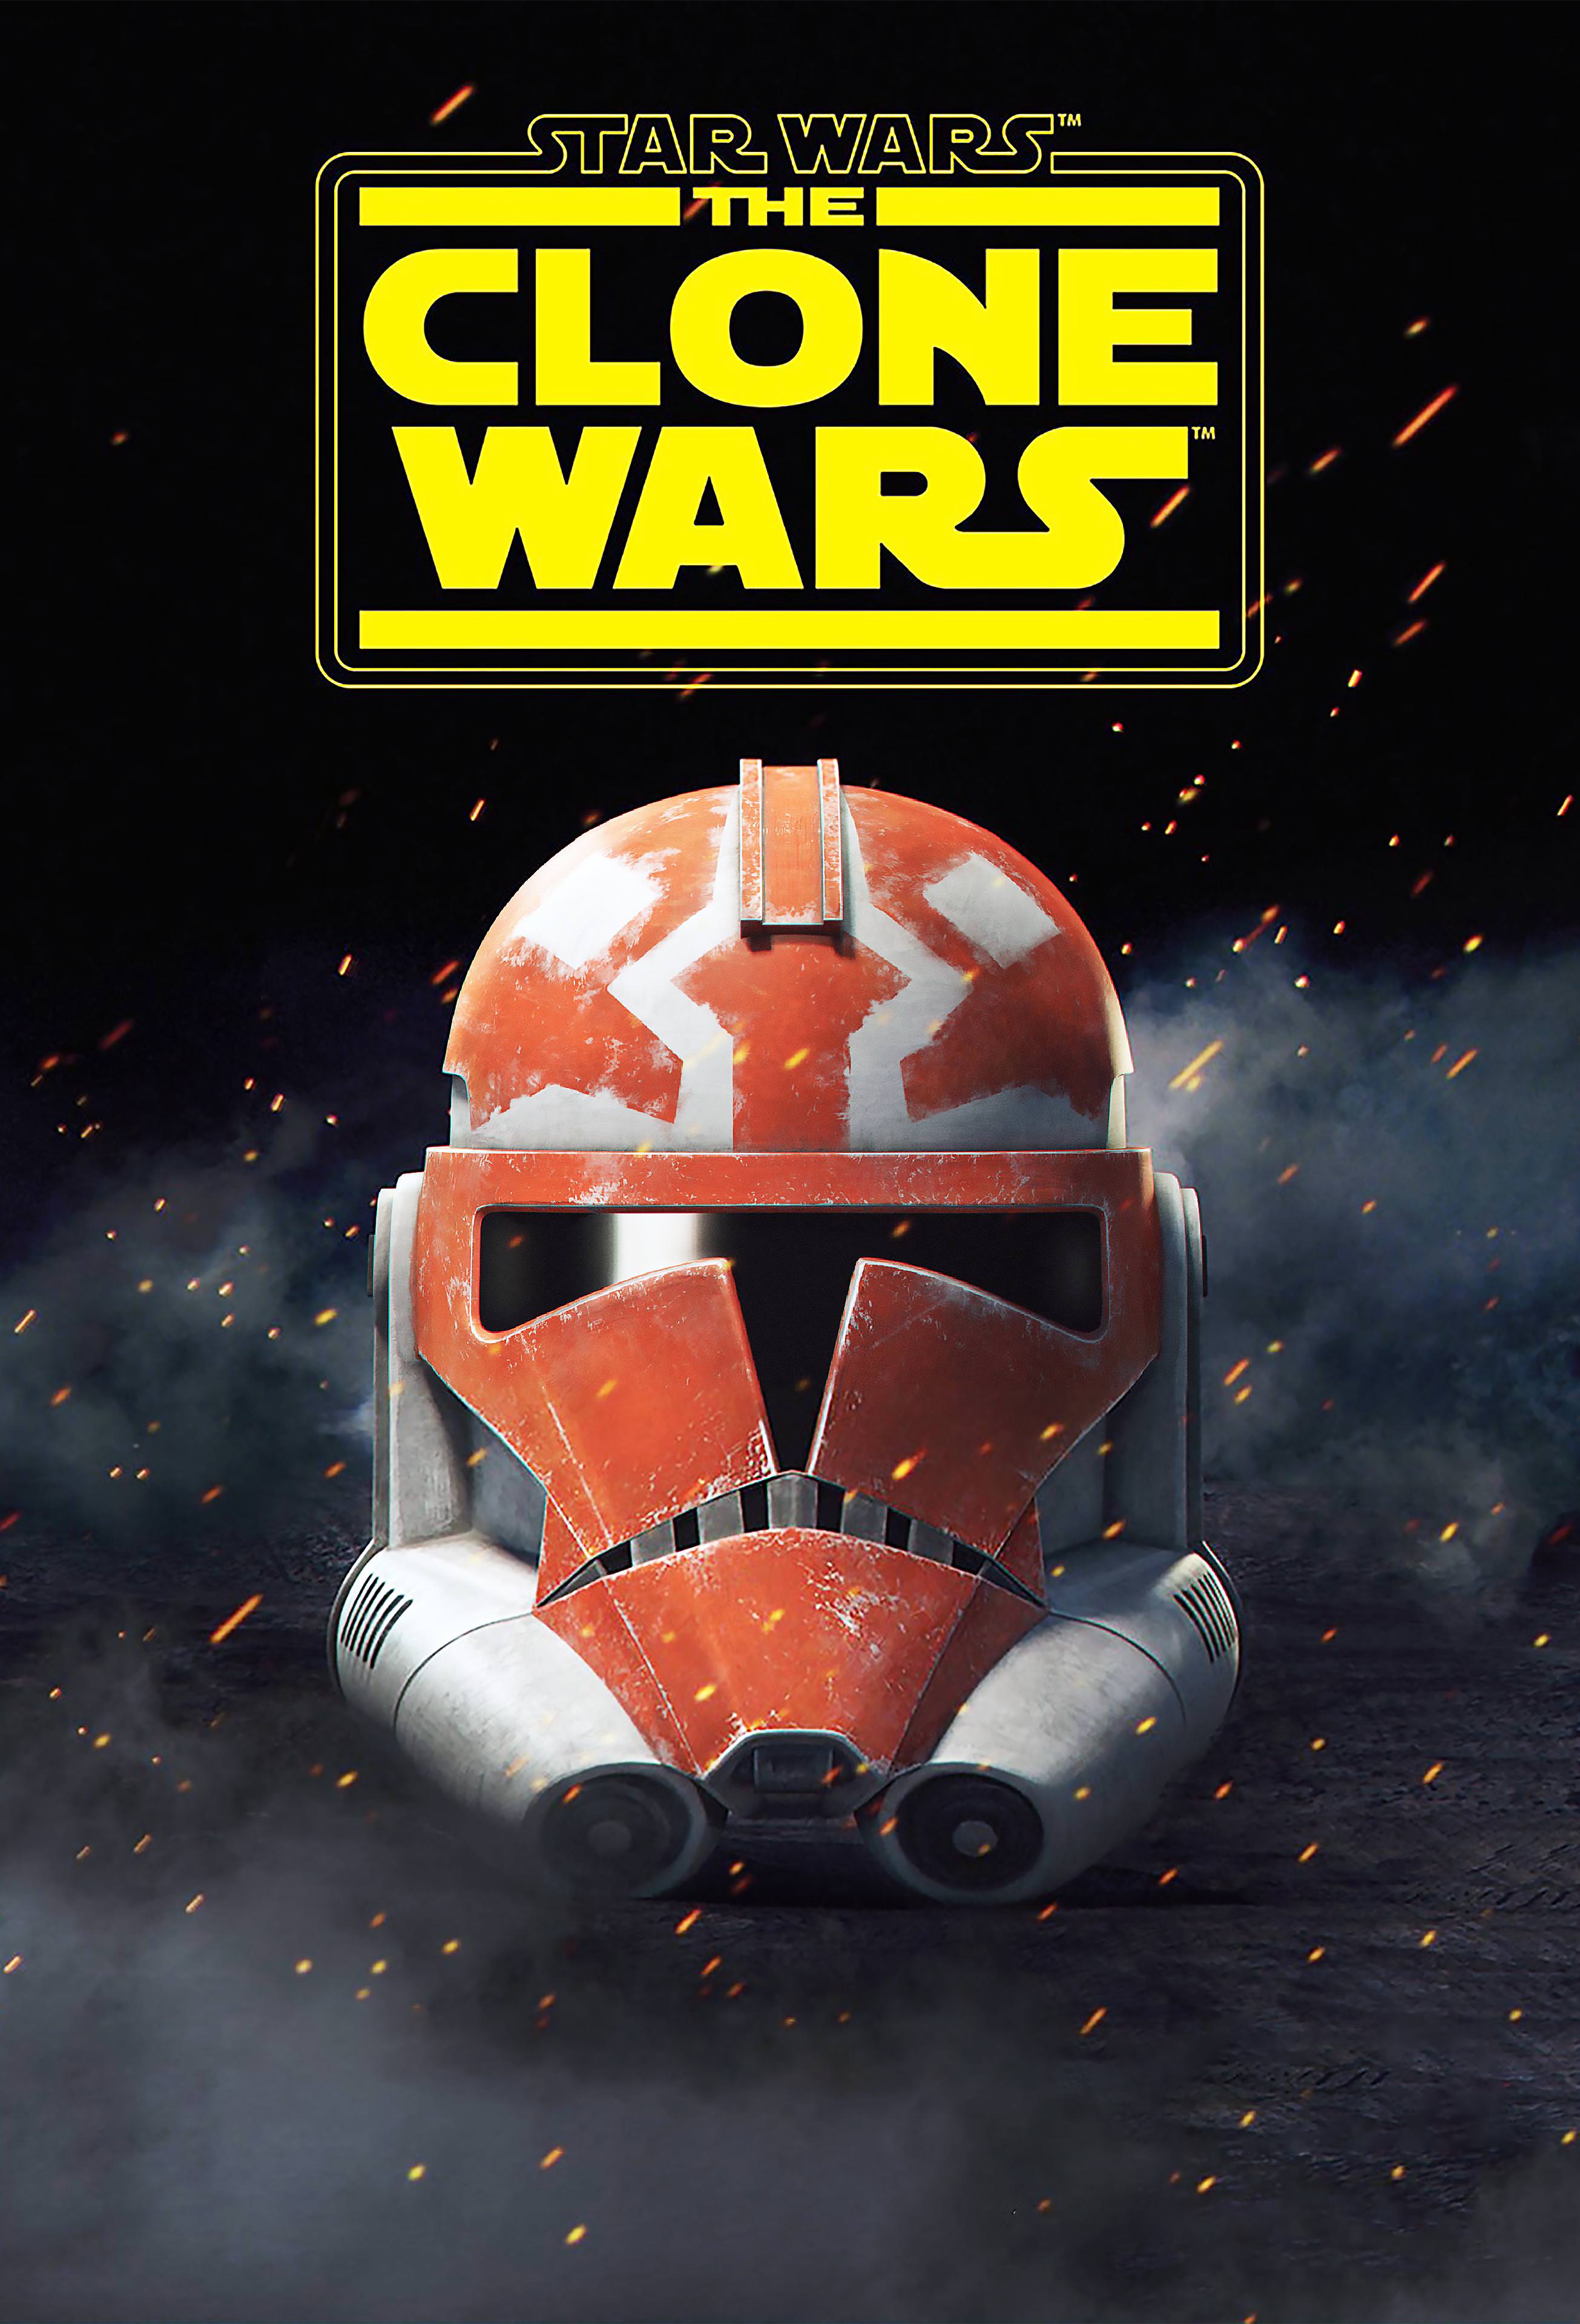 Star Wars The Clone Wars Poster 2610x3840 Wallpaper Teahub Io